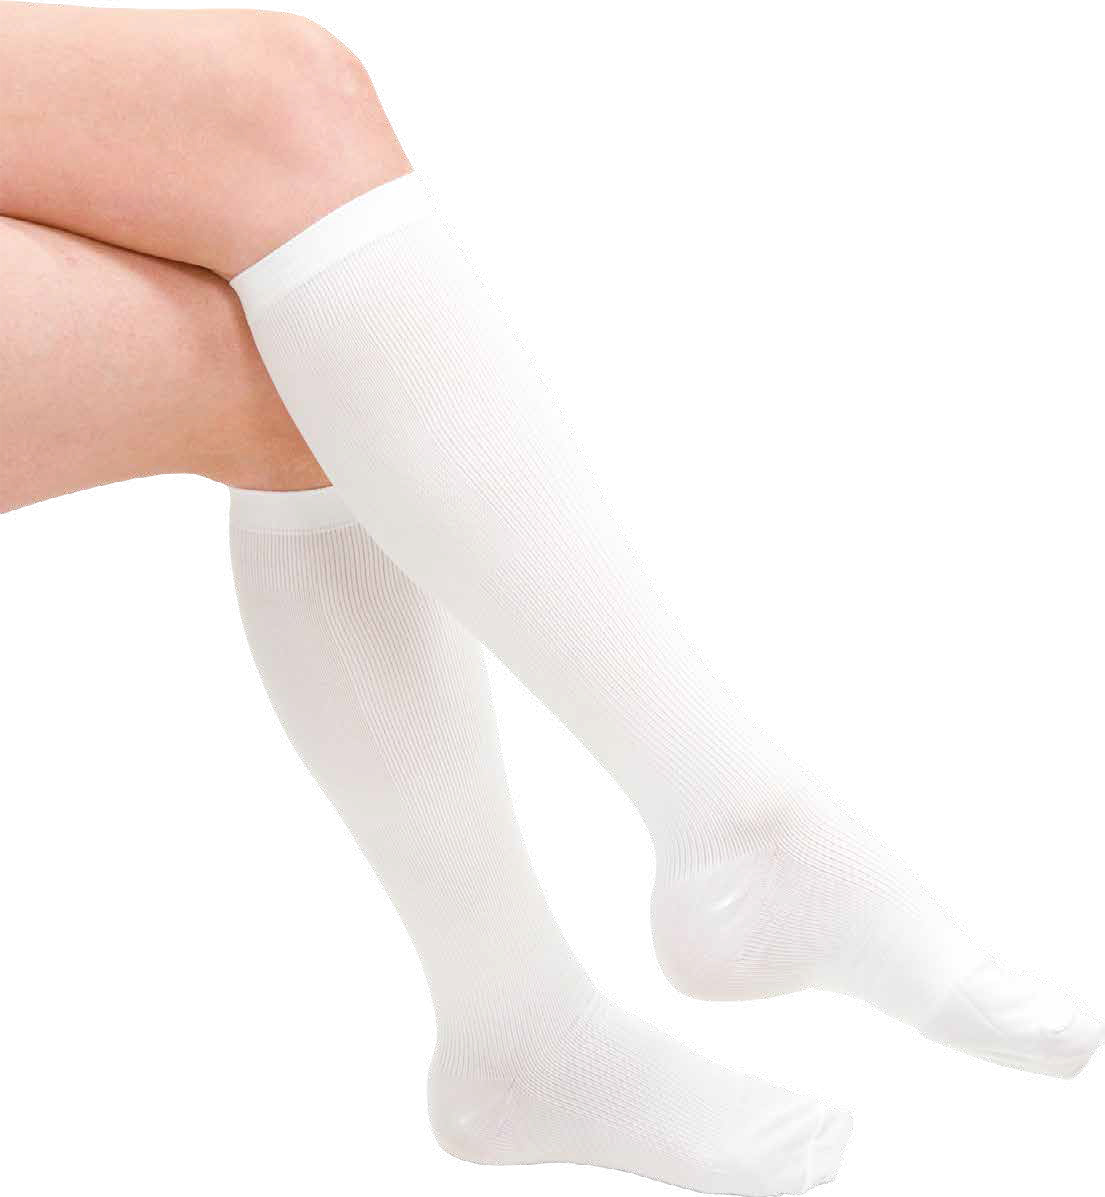 Women's Full Circle, Moderate Graduated Compression Socks